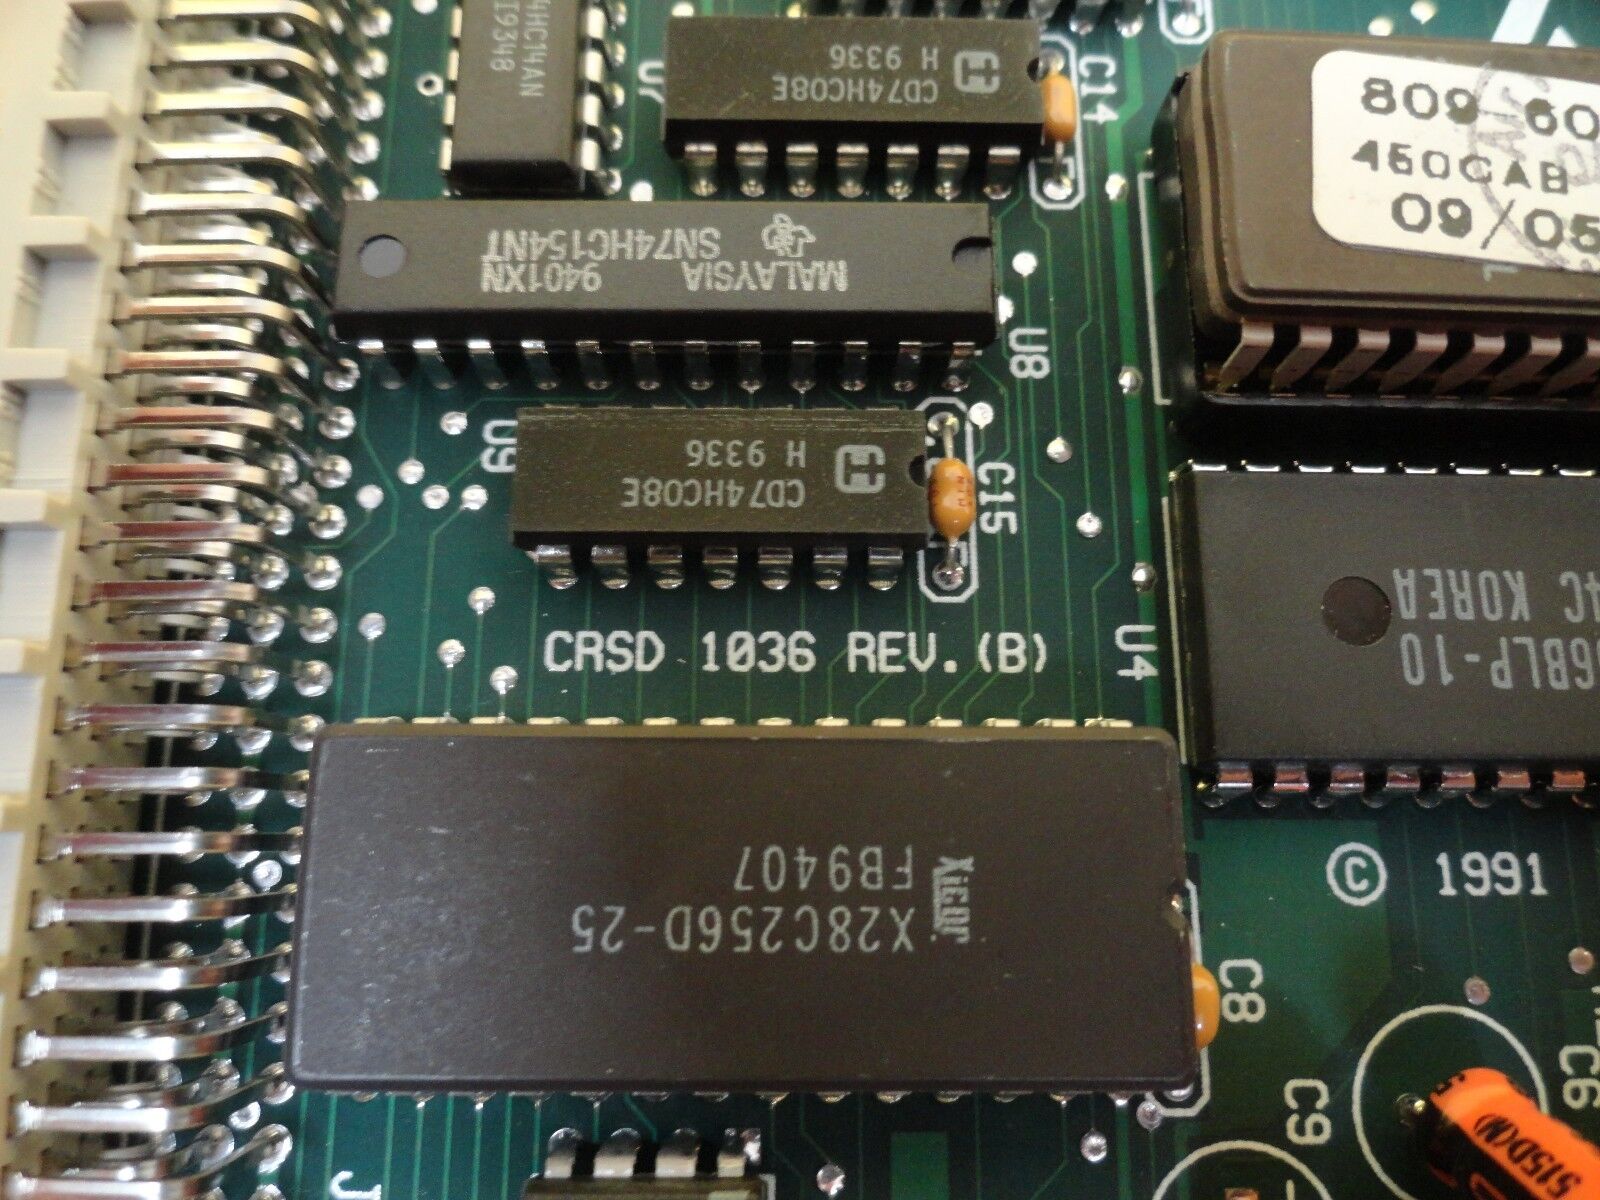 Air Products CRSD 1036 CPU Processor Board PCB Card CRSD1036 Used Working